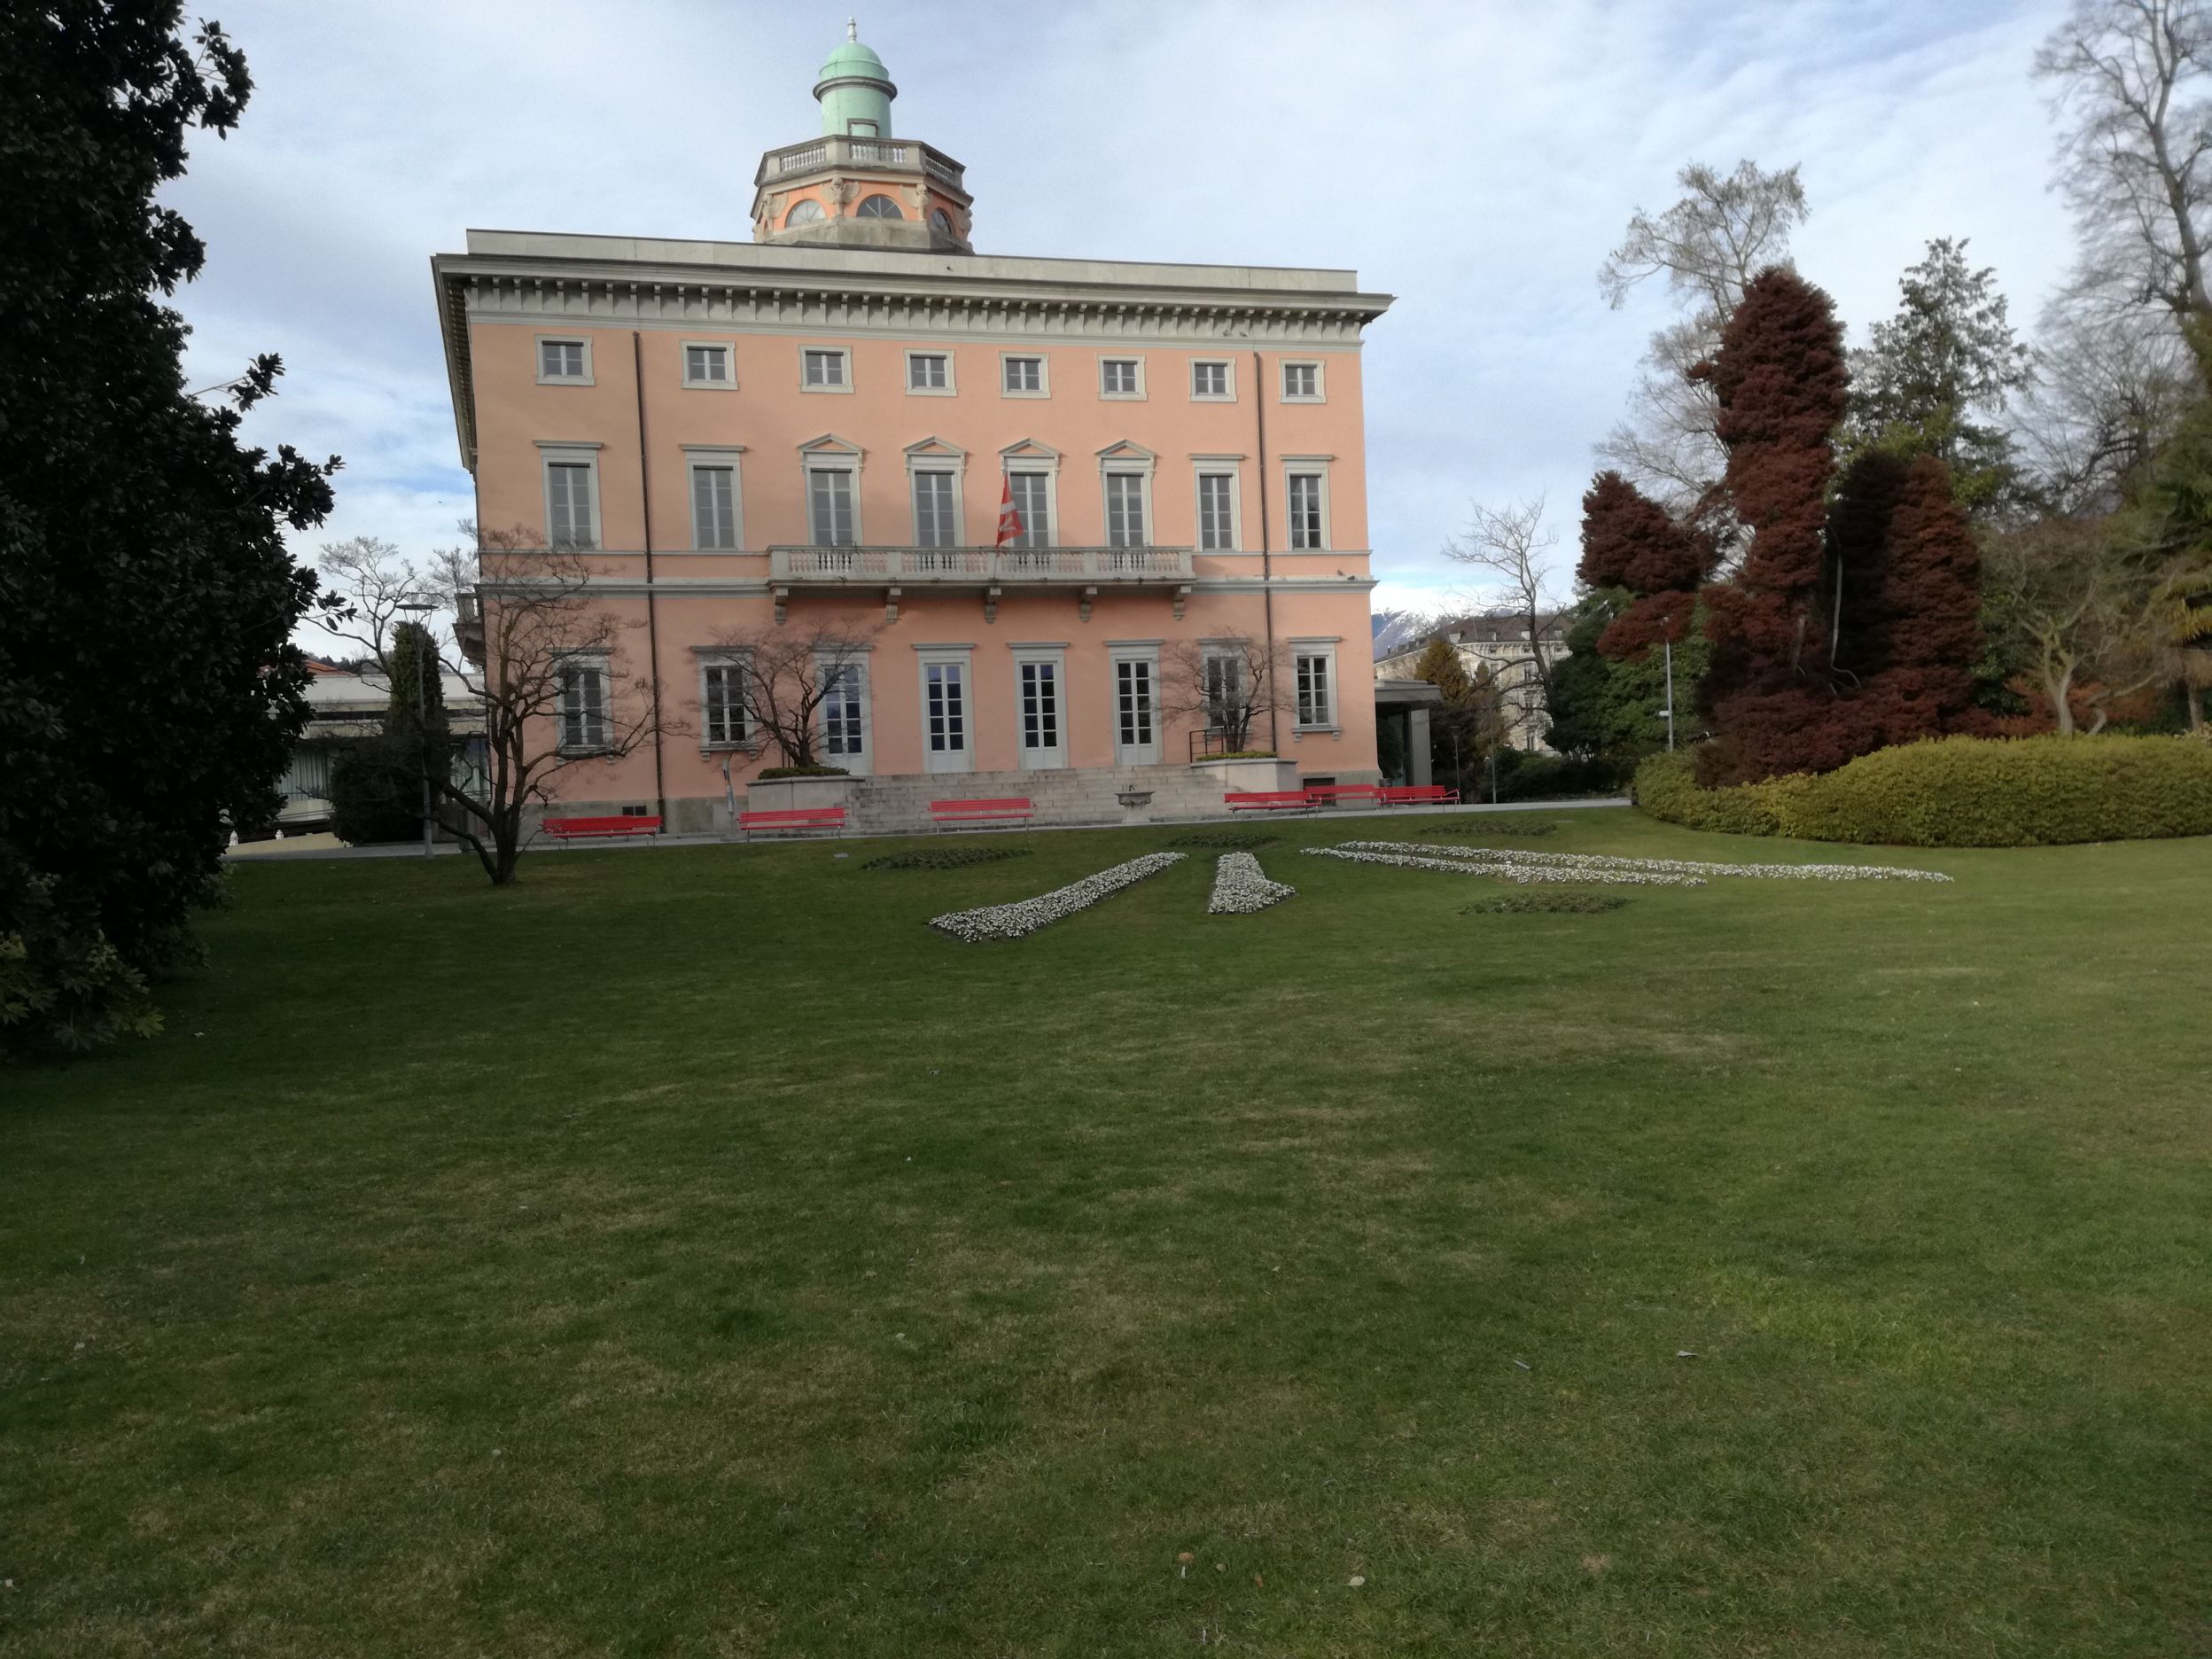 A Villa Ciani